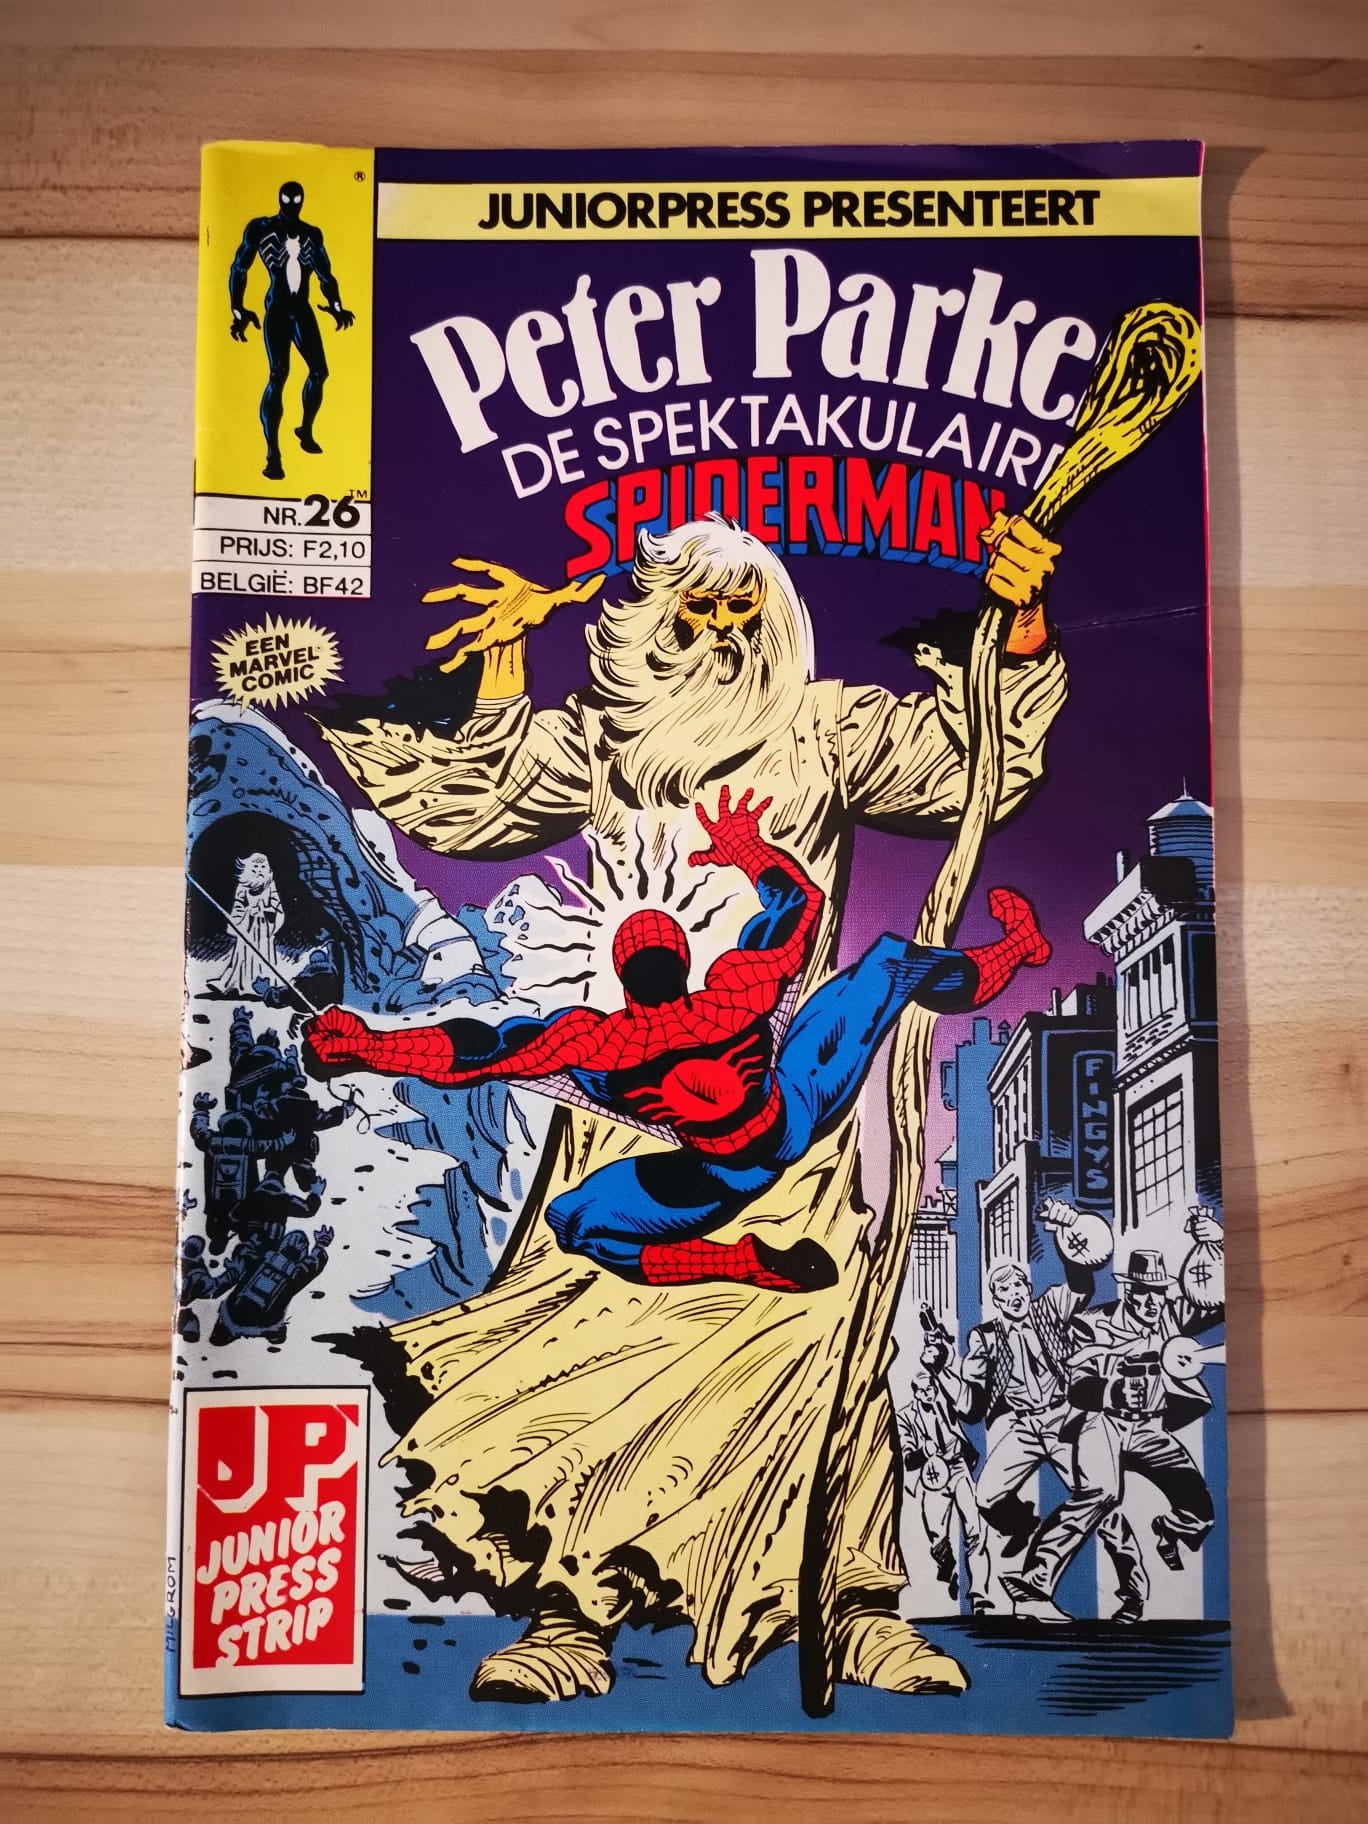 Peter Parker De spektakulaire spiderman #26